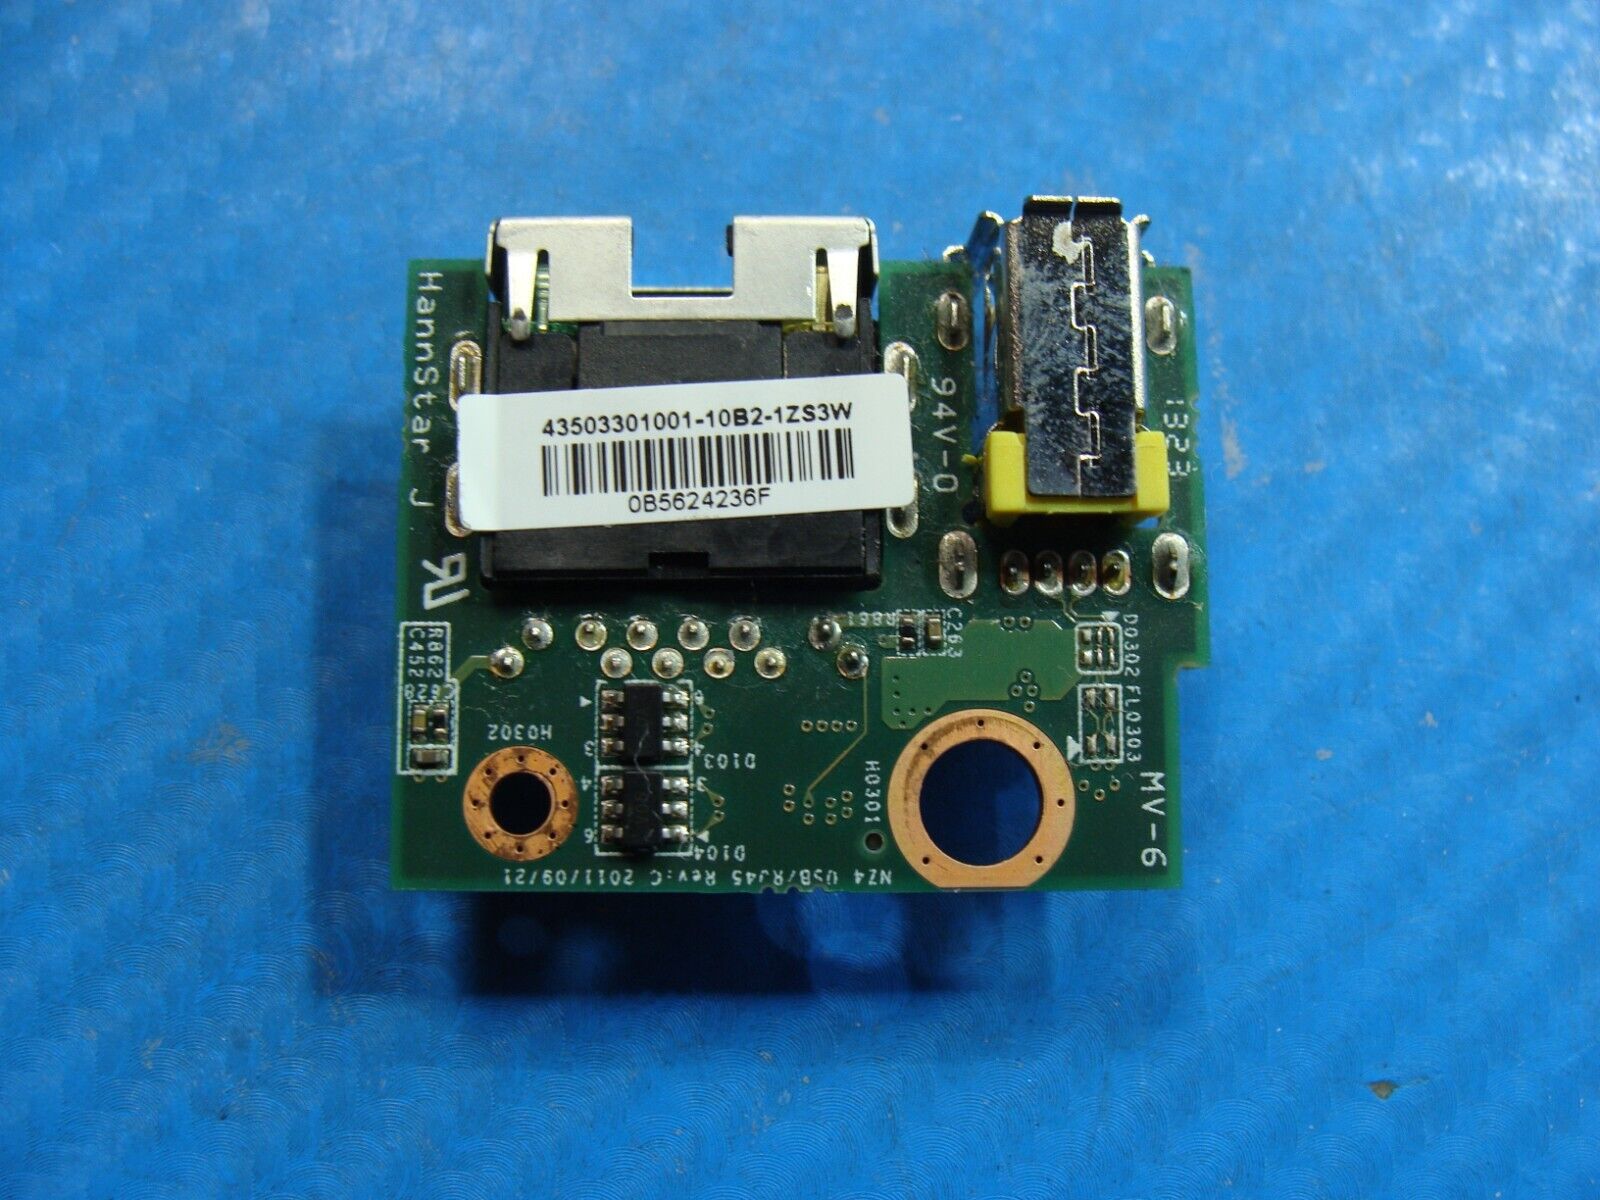 Lenovo ThinkPad T430 14 Genuine USB RJ45 Ethernet LAN Port Board 0B562423